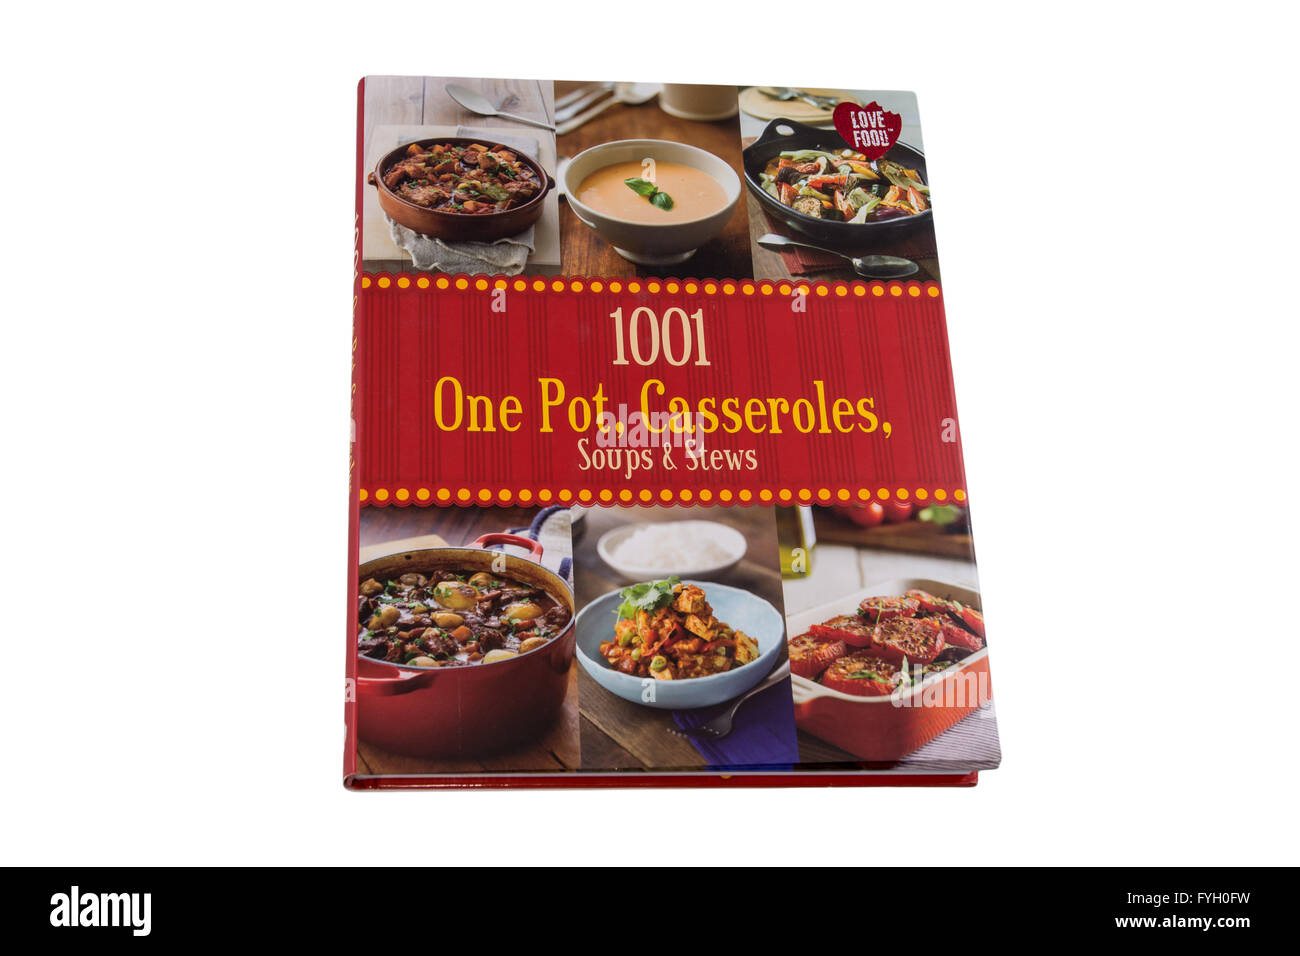 1001 One Pot, Casseroles, Soups & Stews - Love Food by Parragon Books Stock Photo